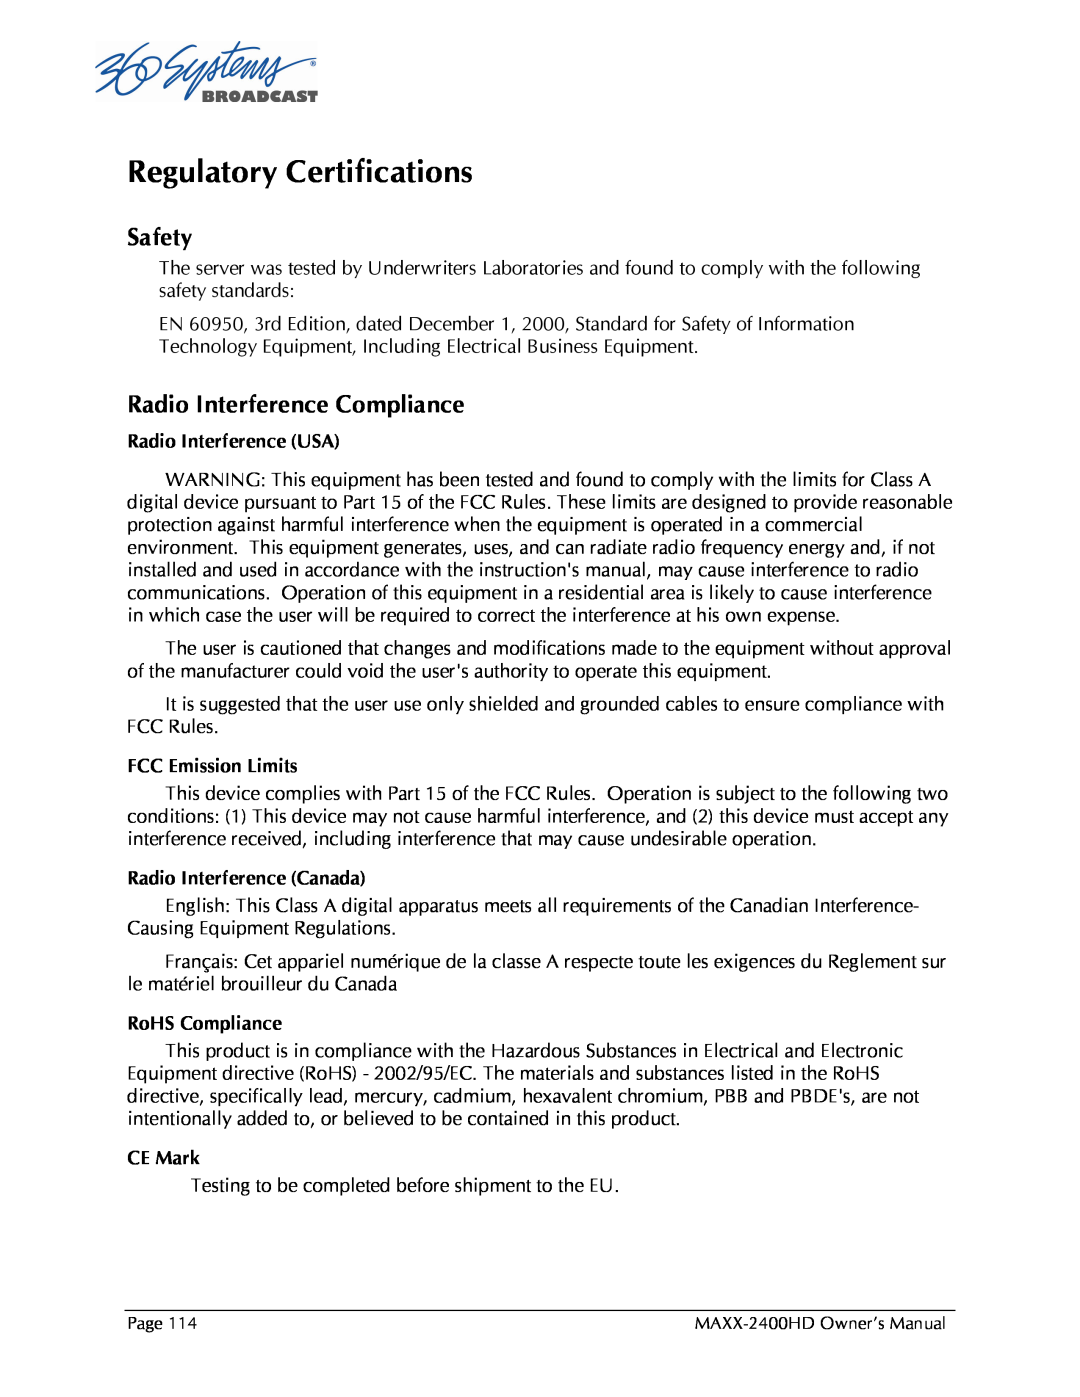 Maxxsonics MAXX-2400HD manual Regulatory Certifications, Safety, Radio Interference Compliance 